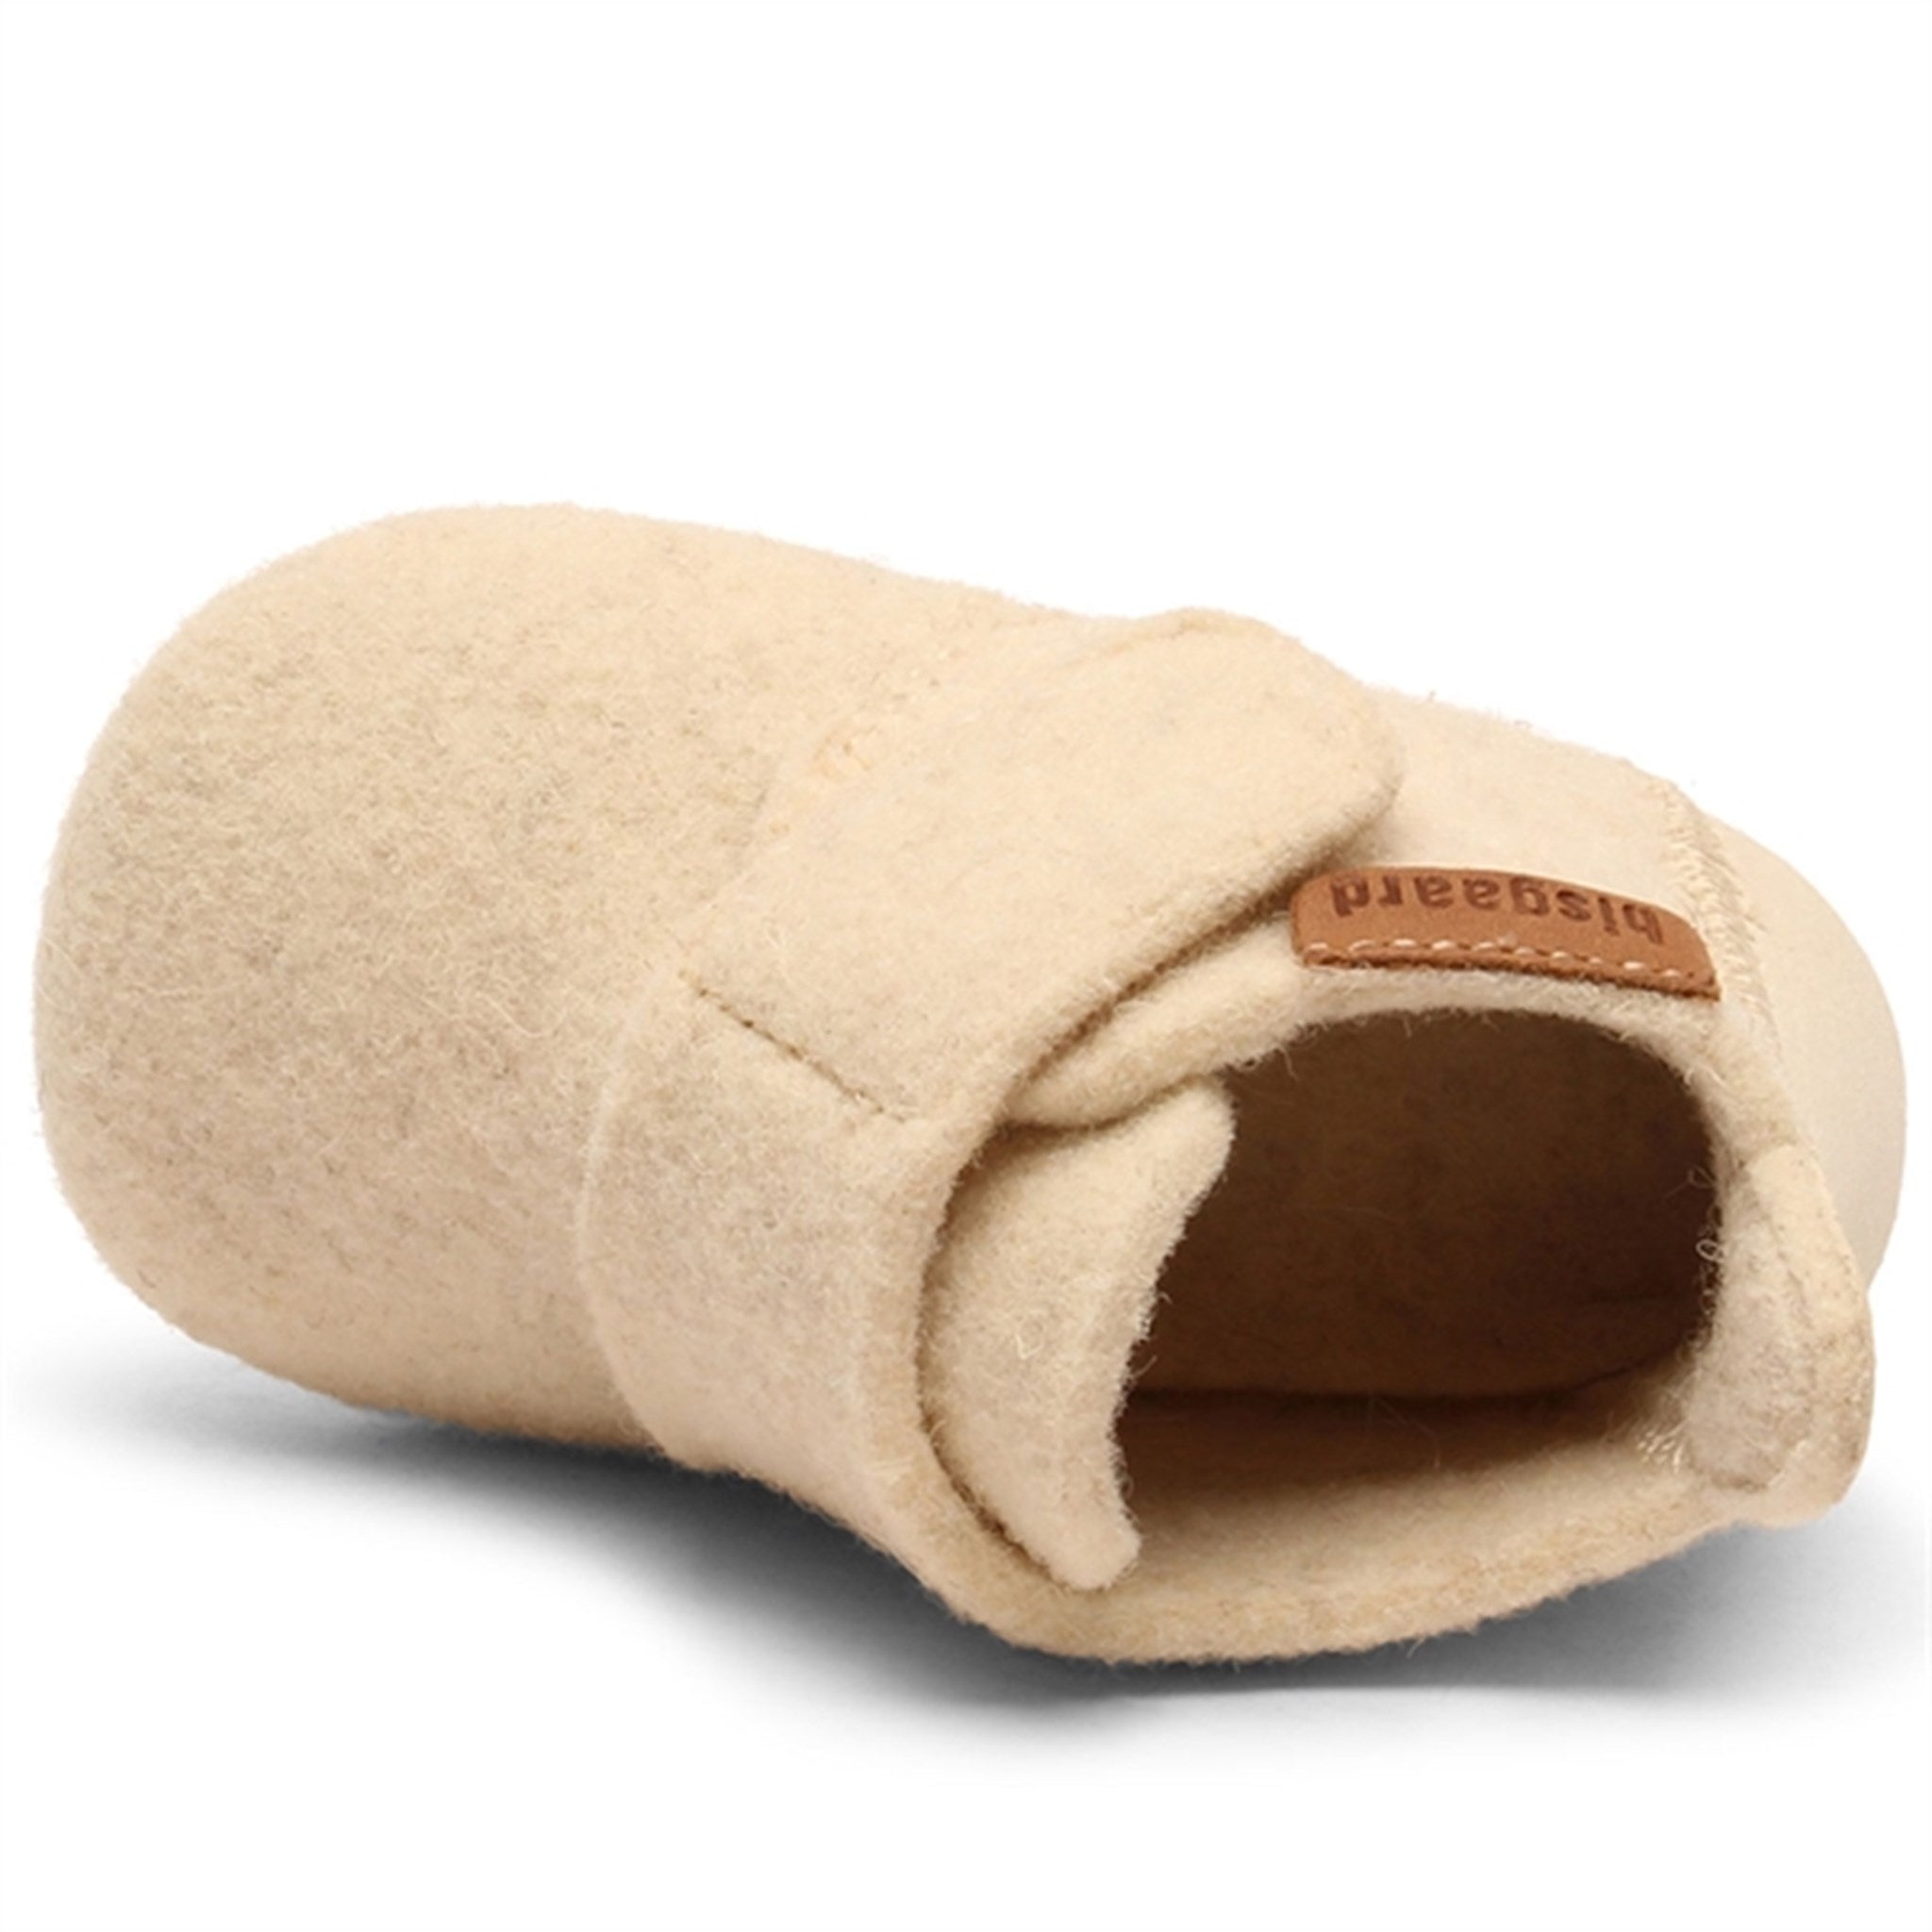 Bisgaard Baby Wool Home Shoe Creme 3